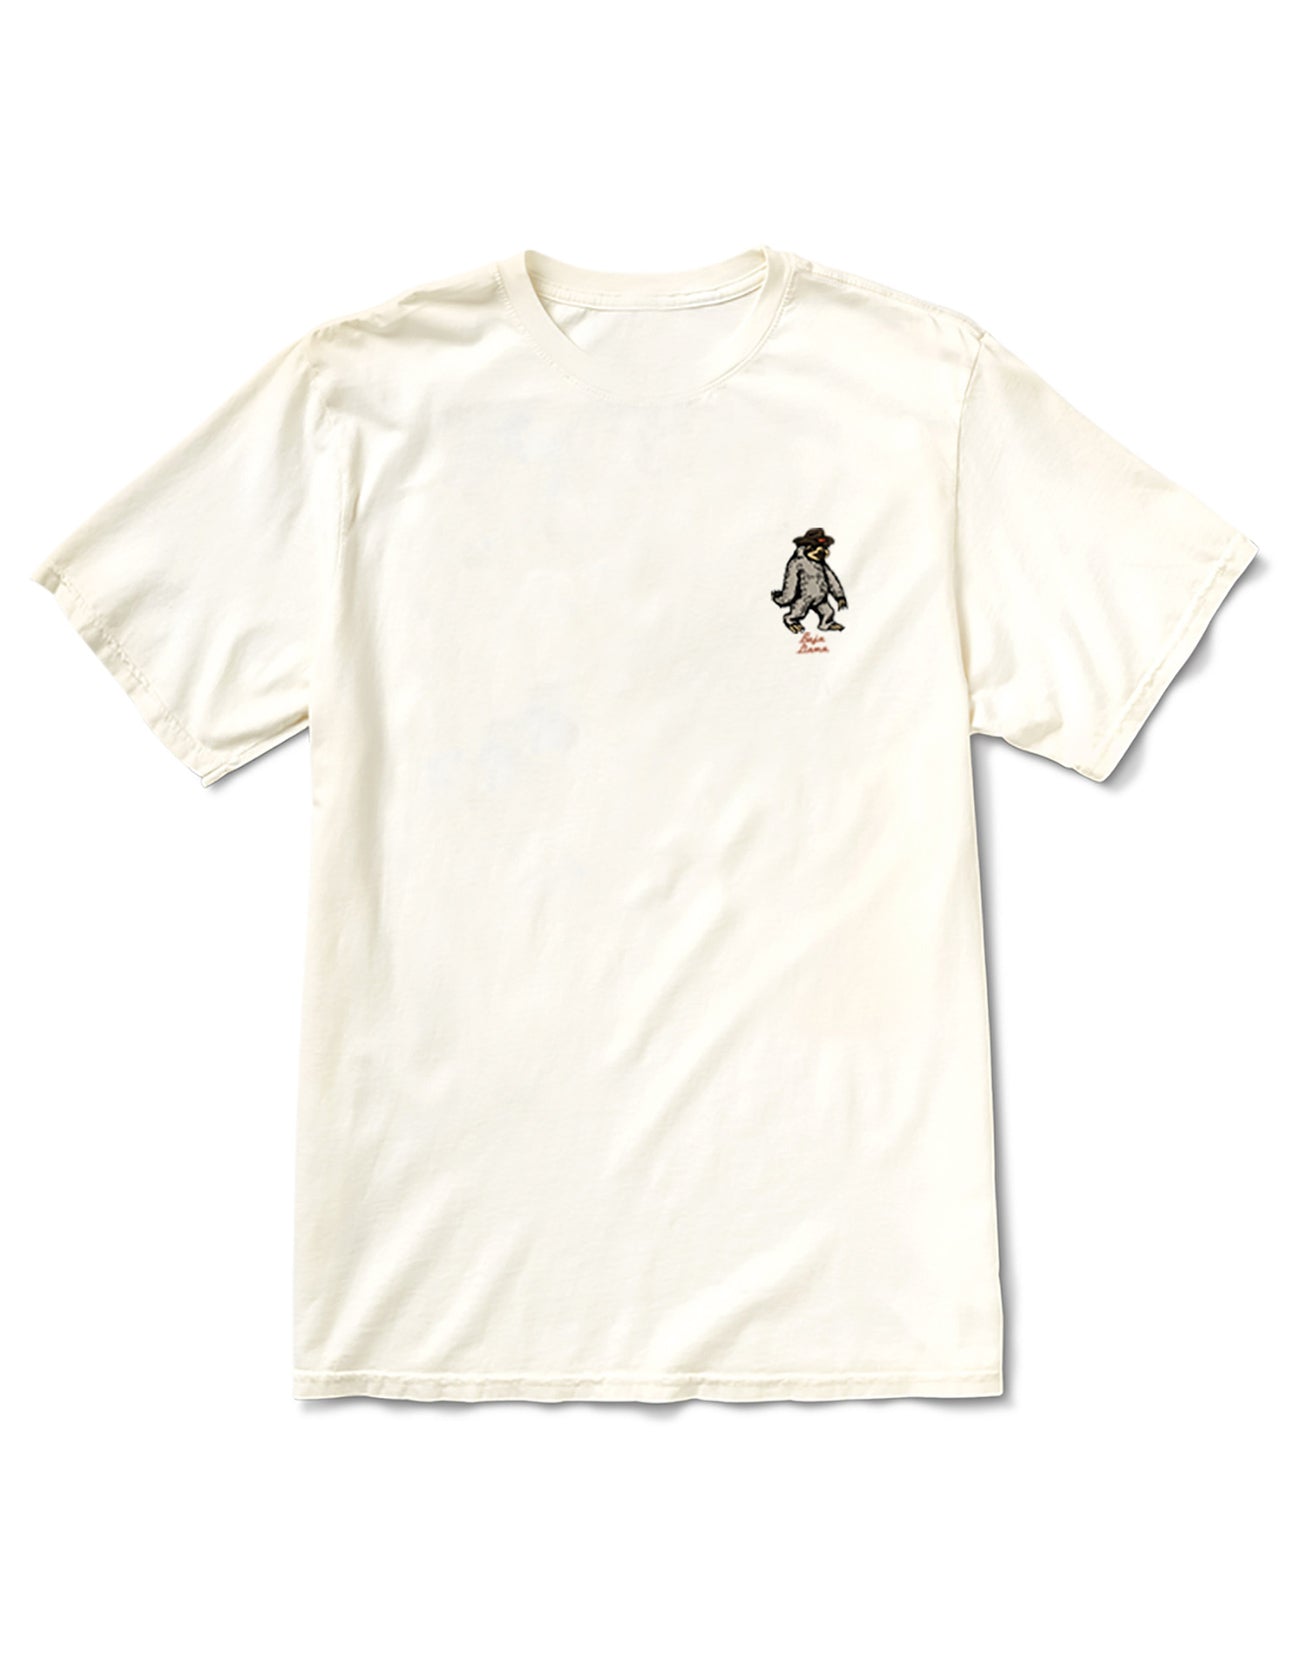 Baja Llama MisAdventure Masters Primo Grpahic Tee, 100% Peruvian cotton shirt with llama and sloth print